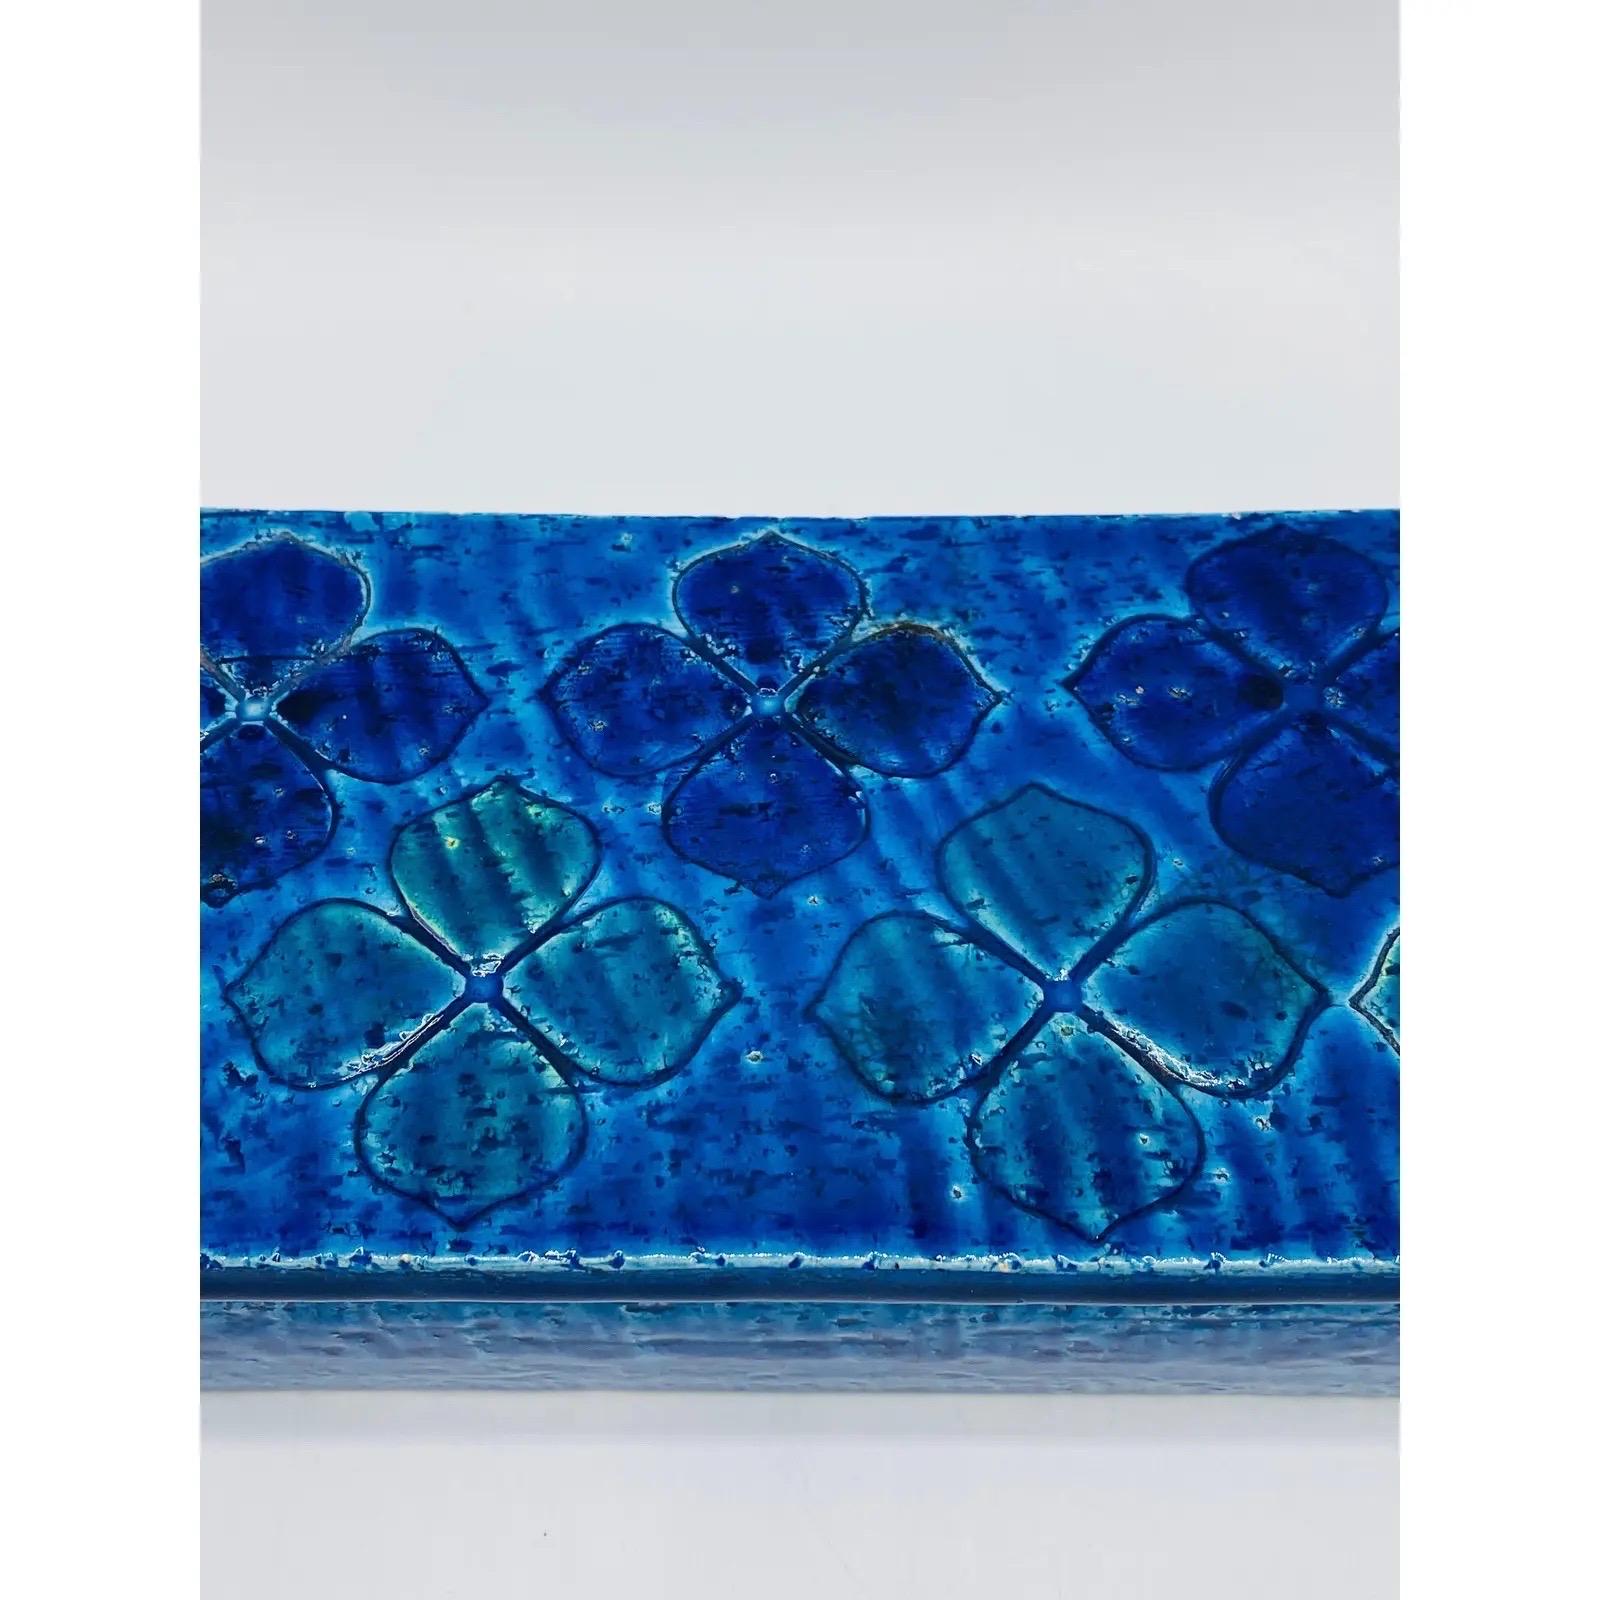 Italian 1960s Aldo Londi Bitossi 'Blue Rimini' Clover Box, #10/20 For Sale